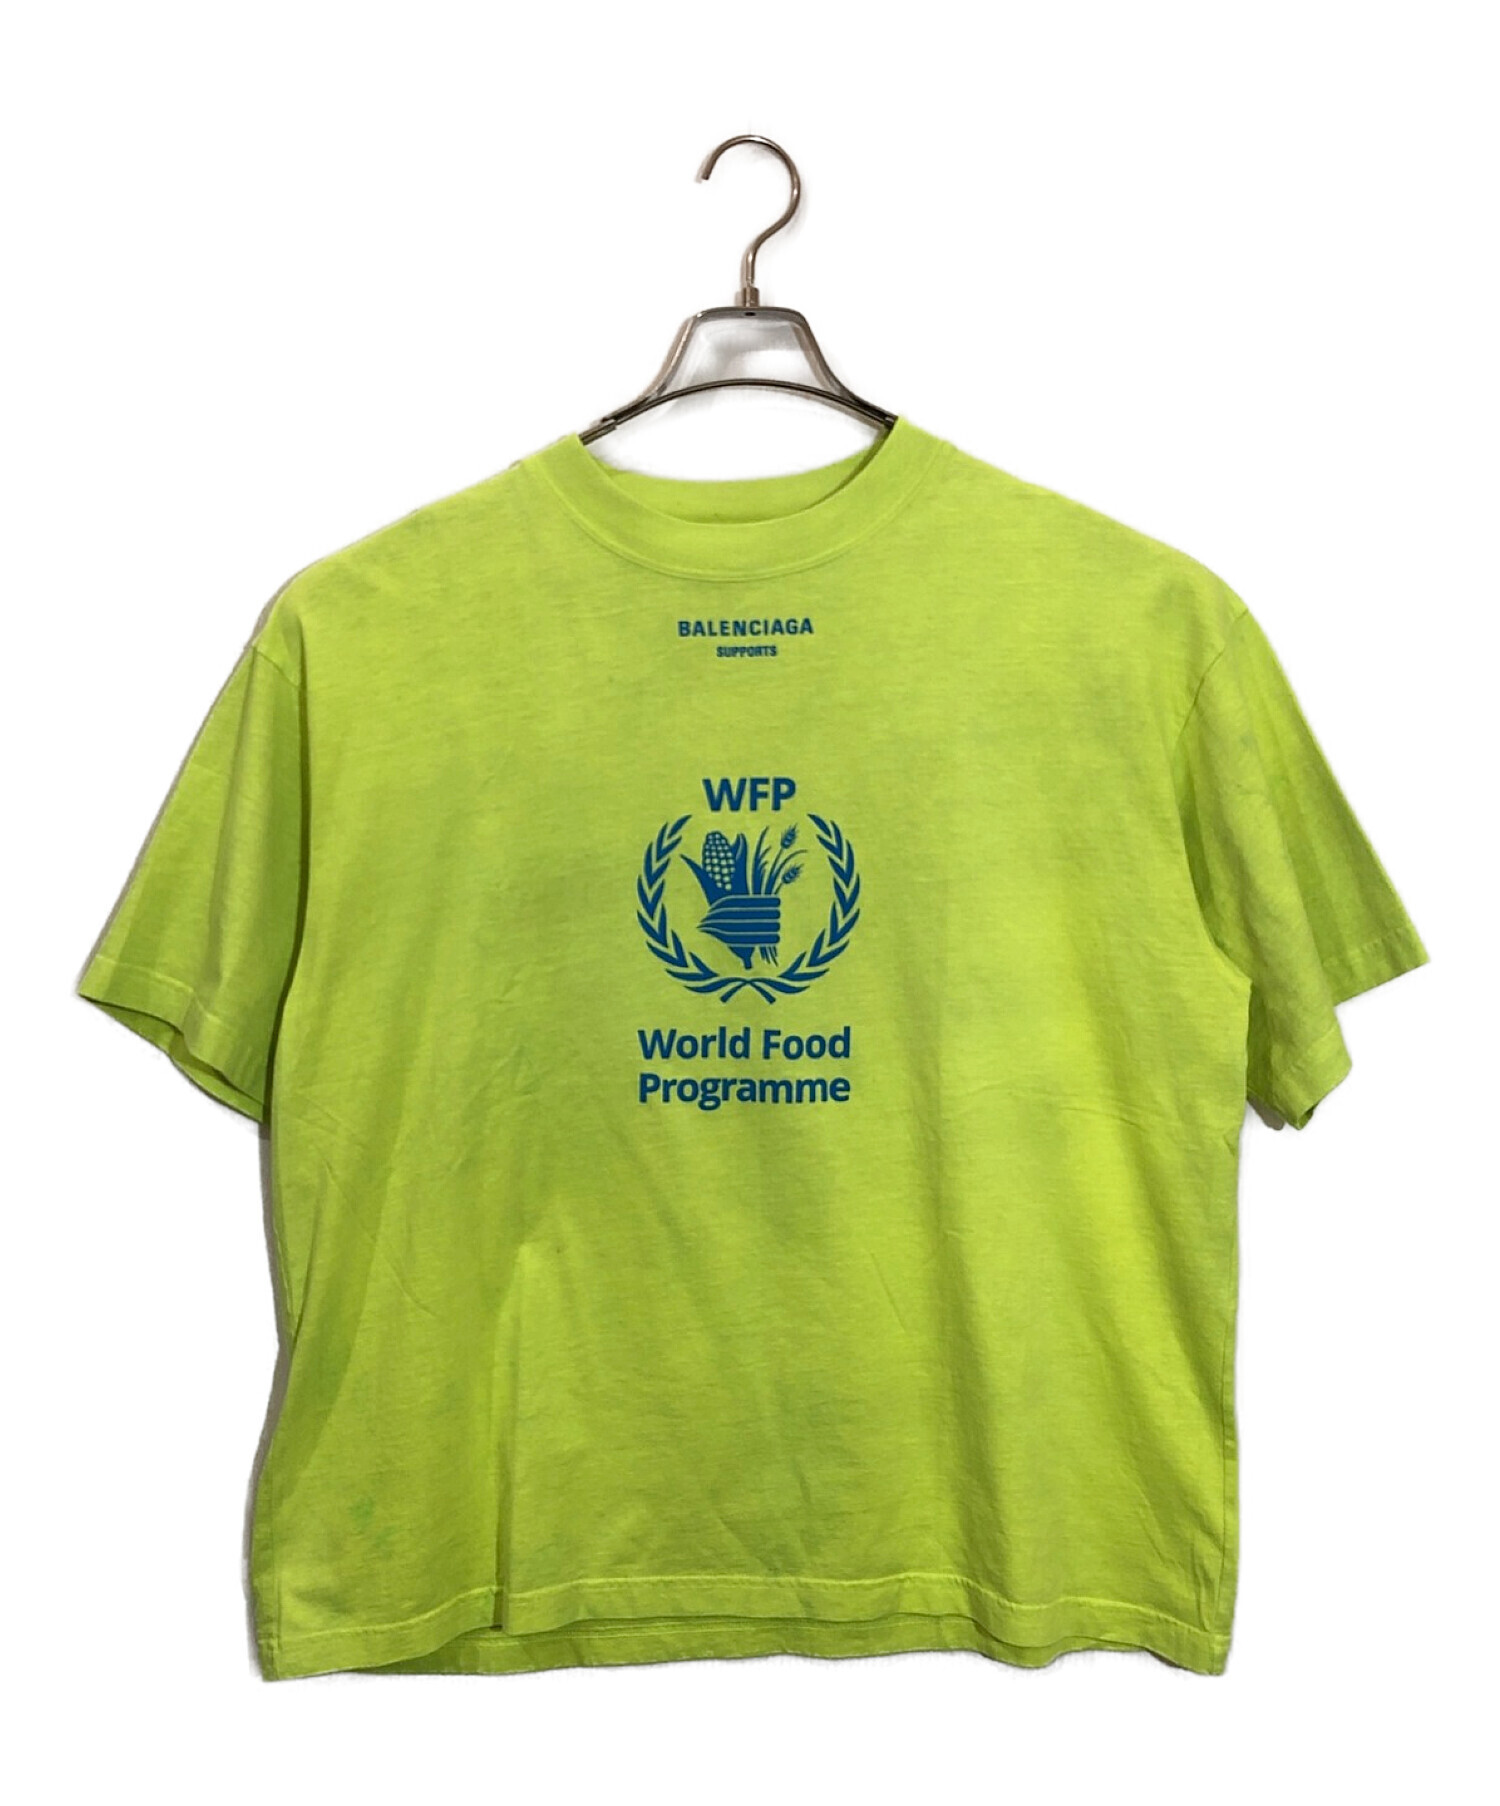 BALENCIAGA (バレンシアガ) 『世界の飢餓撲滅』 WFPプリントTシャツ 黄緑 サイズ:Ⅿ